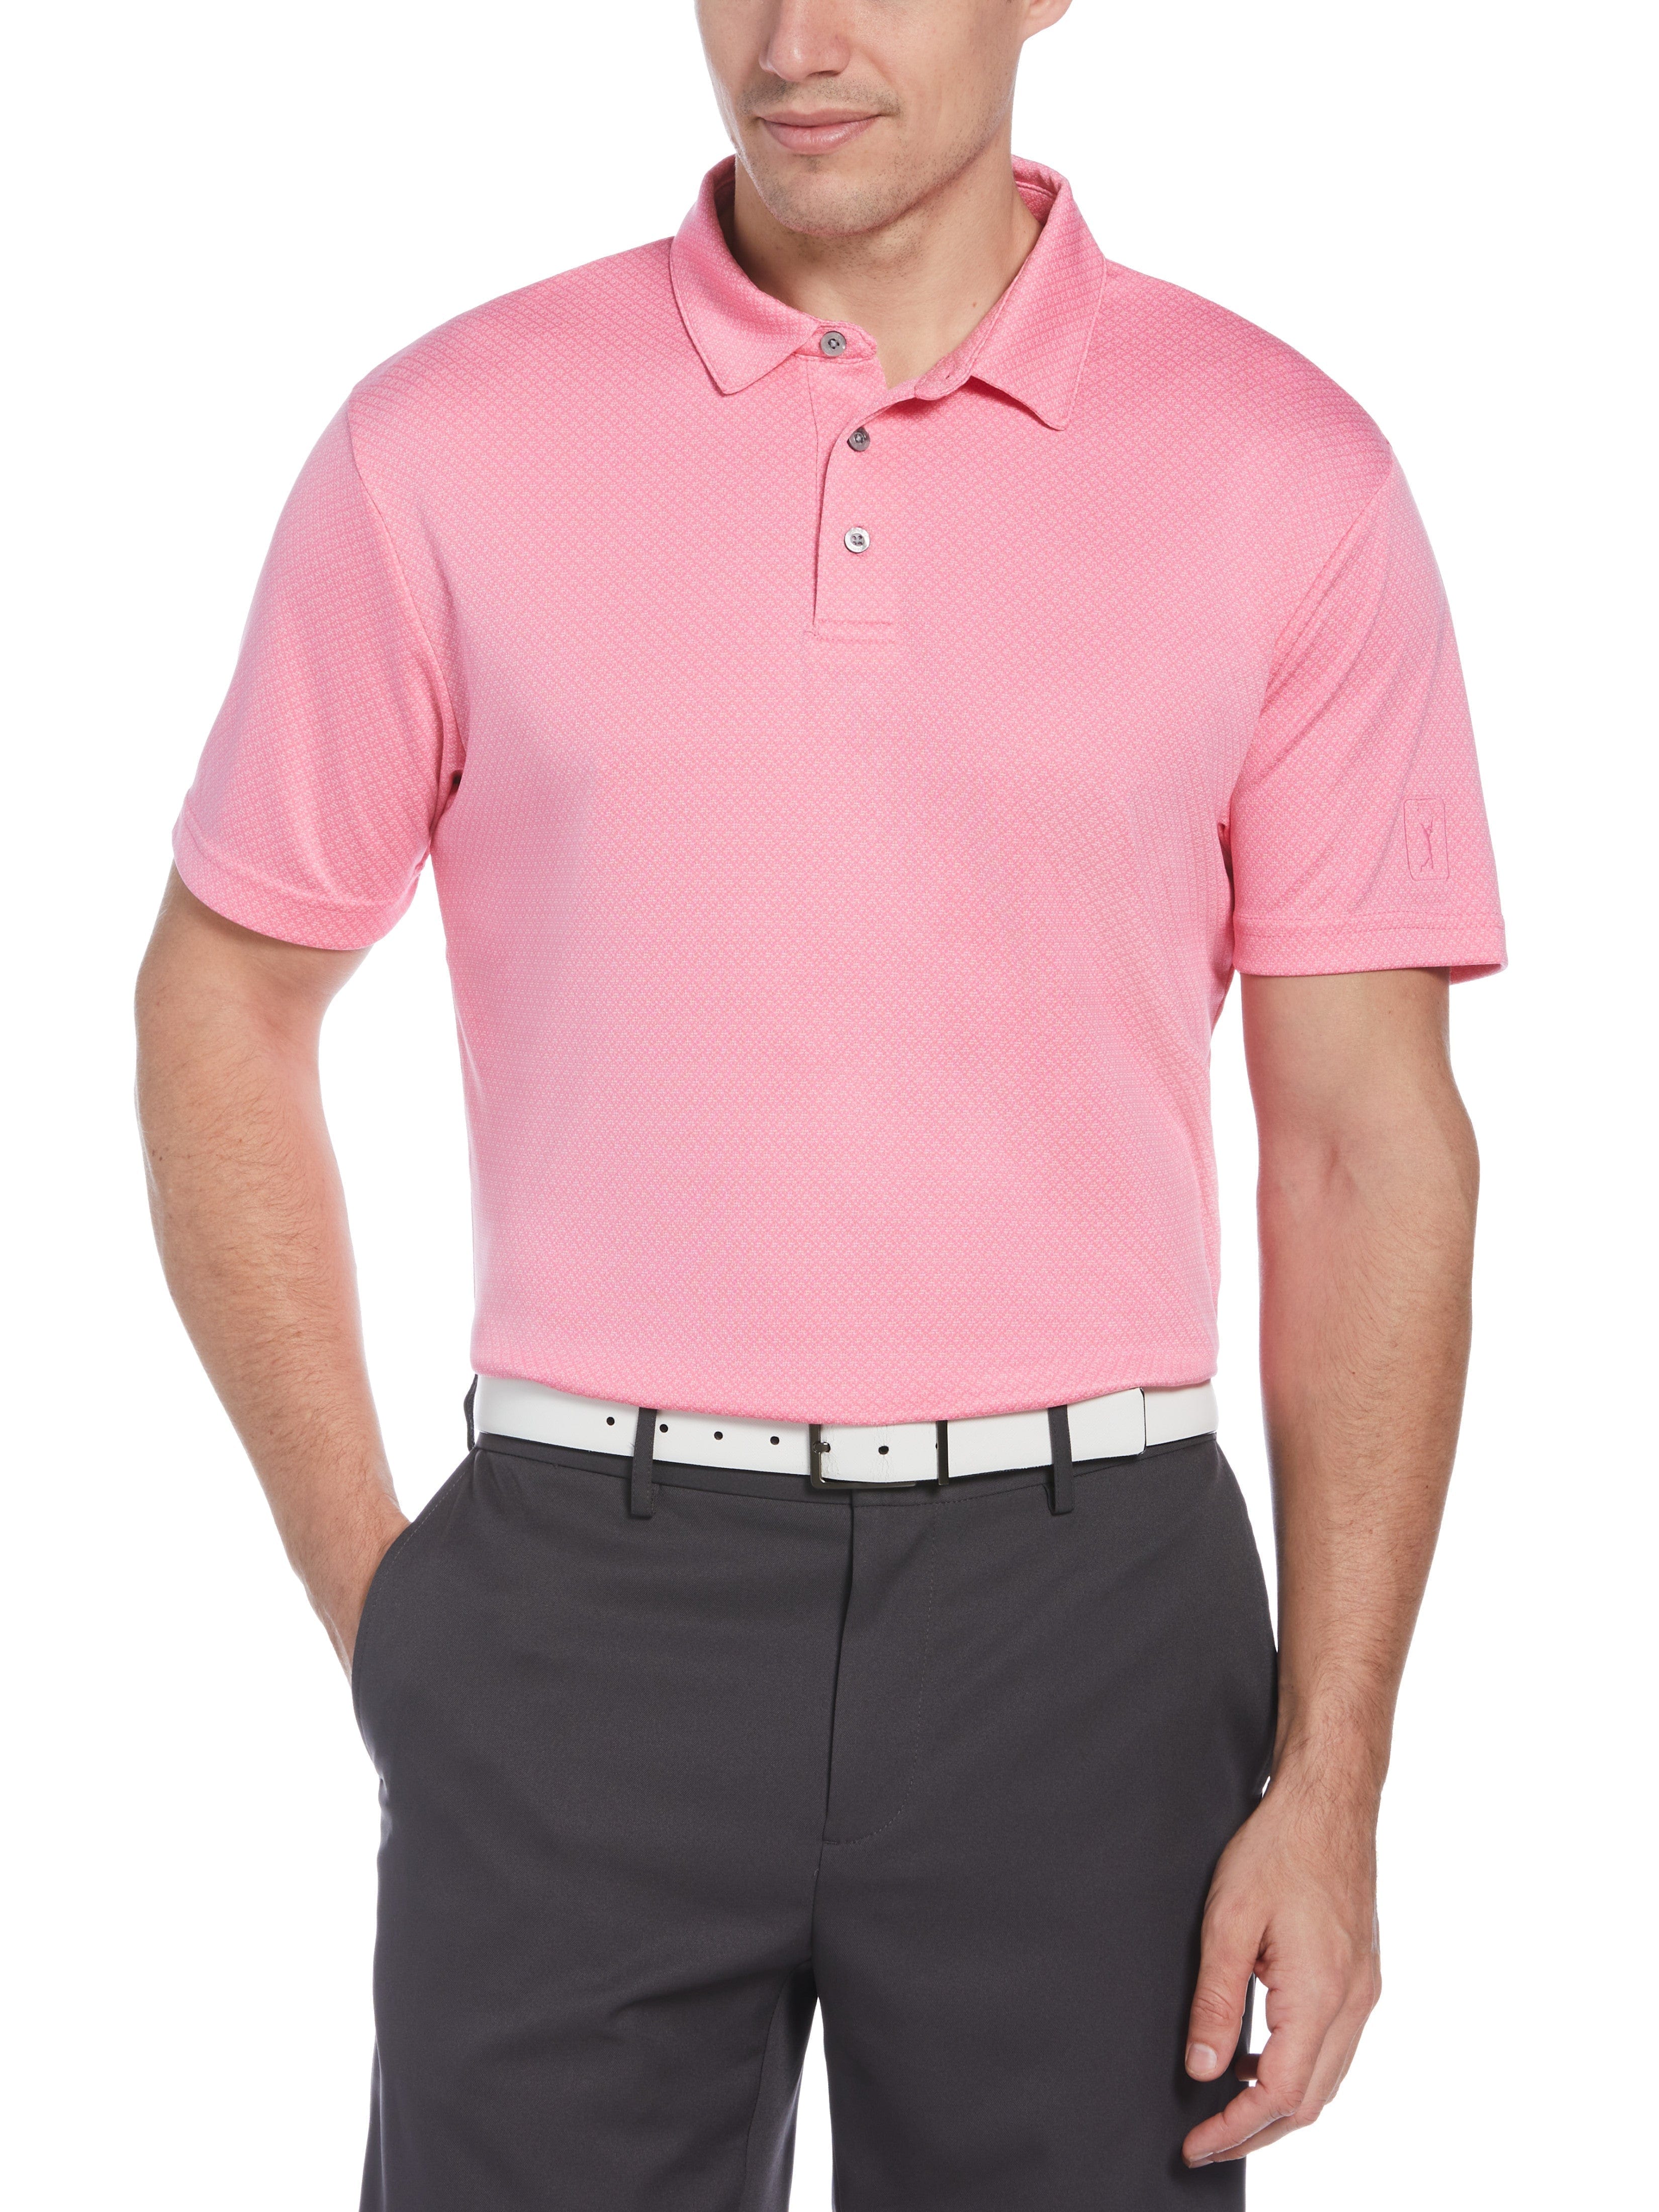 PGA TOUR Apparel Mens Big & Tall Micro Geo Jacquard Golf Polo Shirt, Size 1X, Pink Carnation, 100% Polyester | Golf Apparel Shop